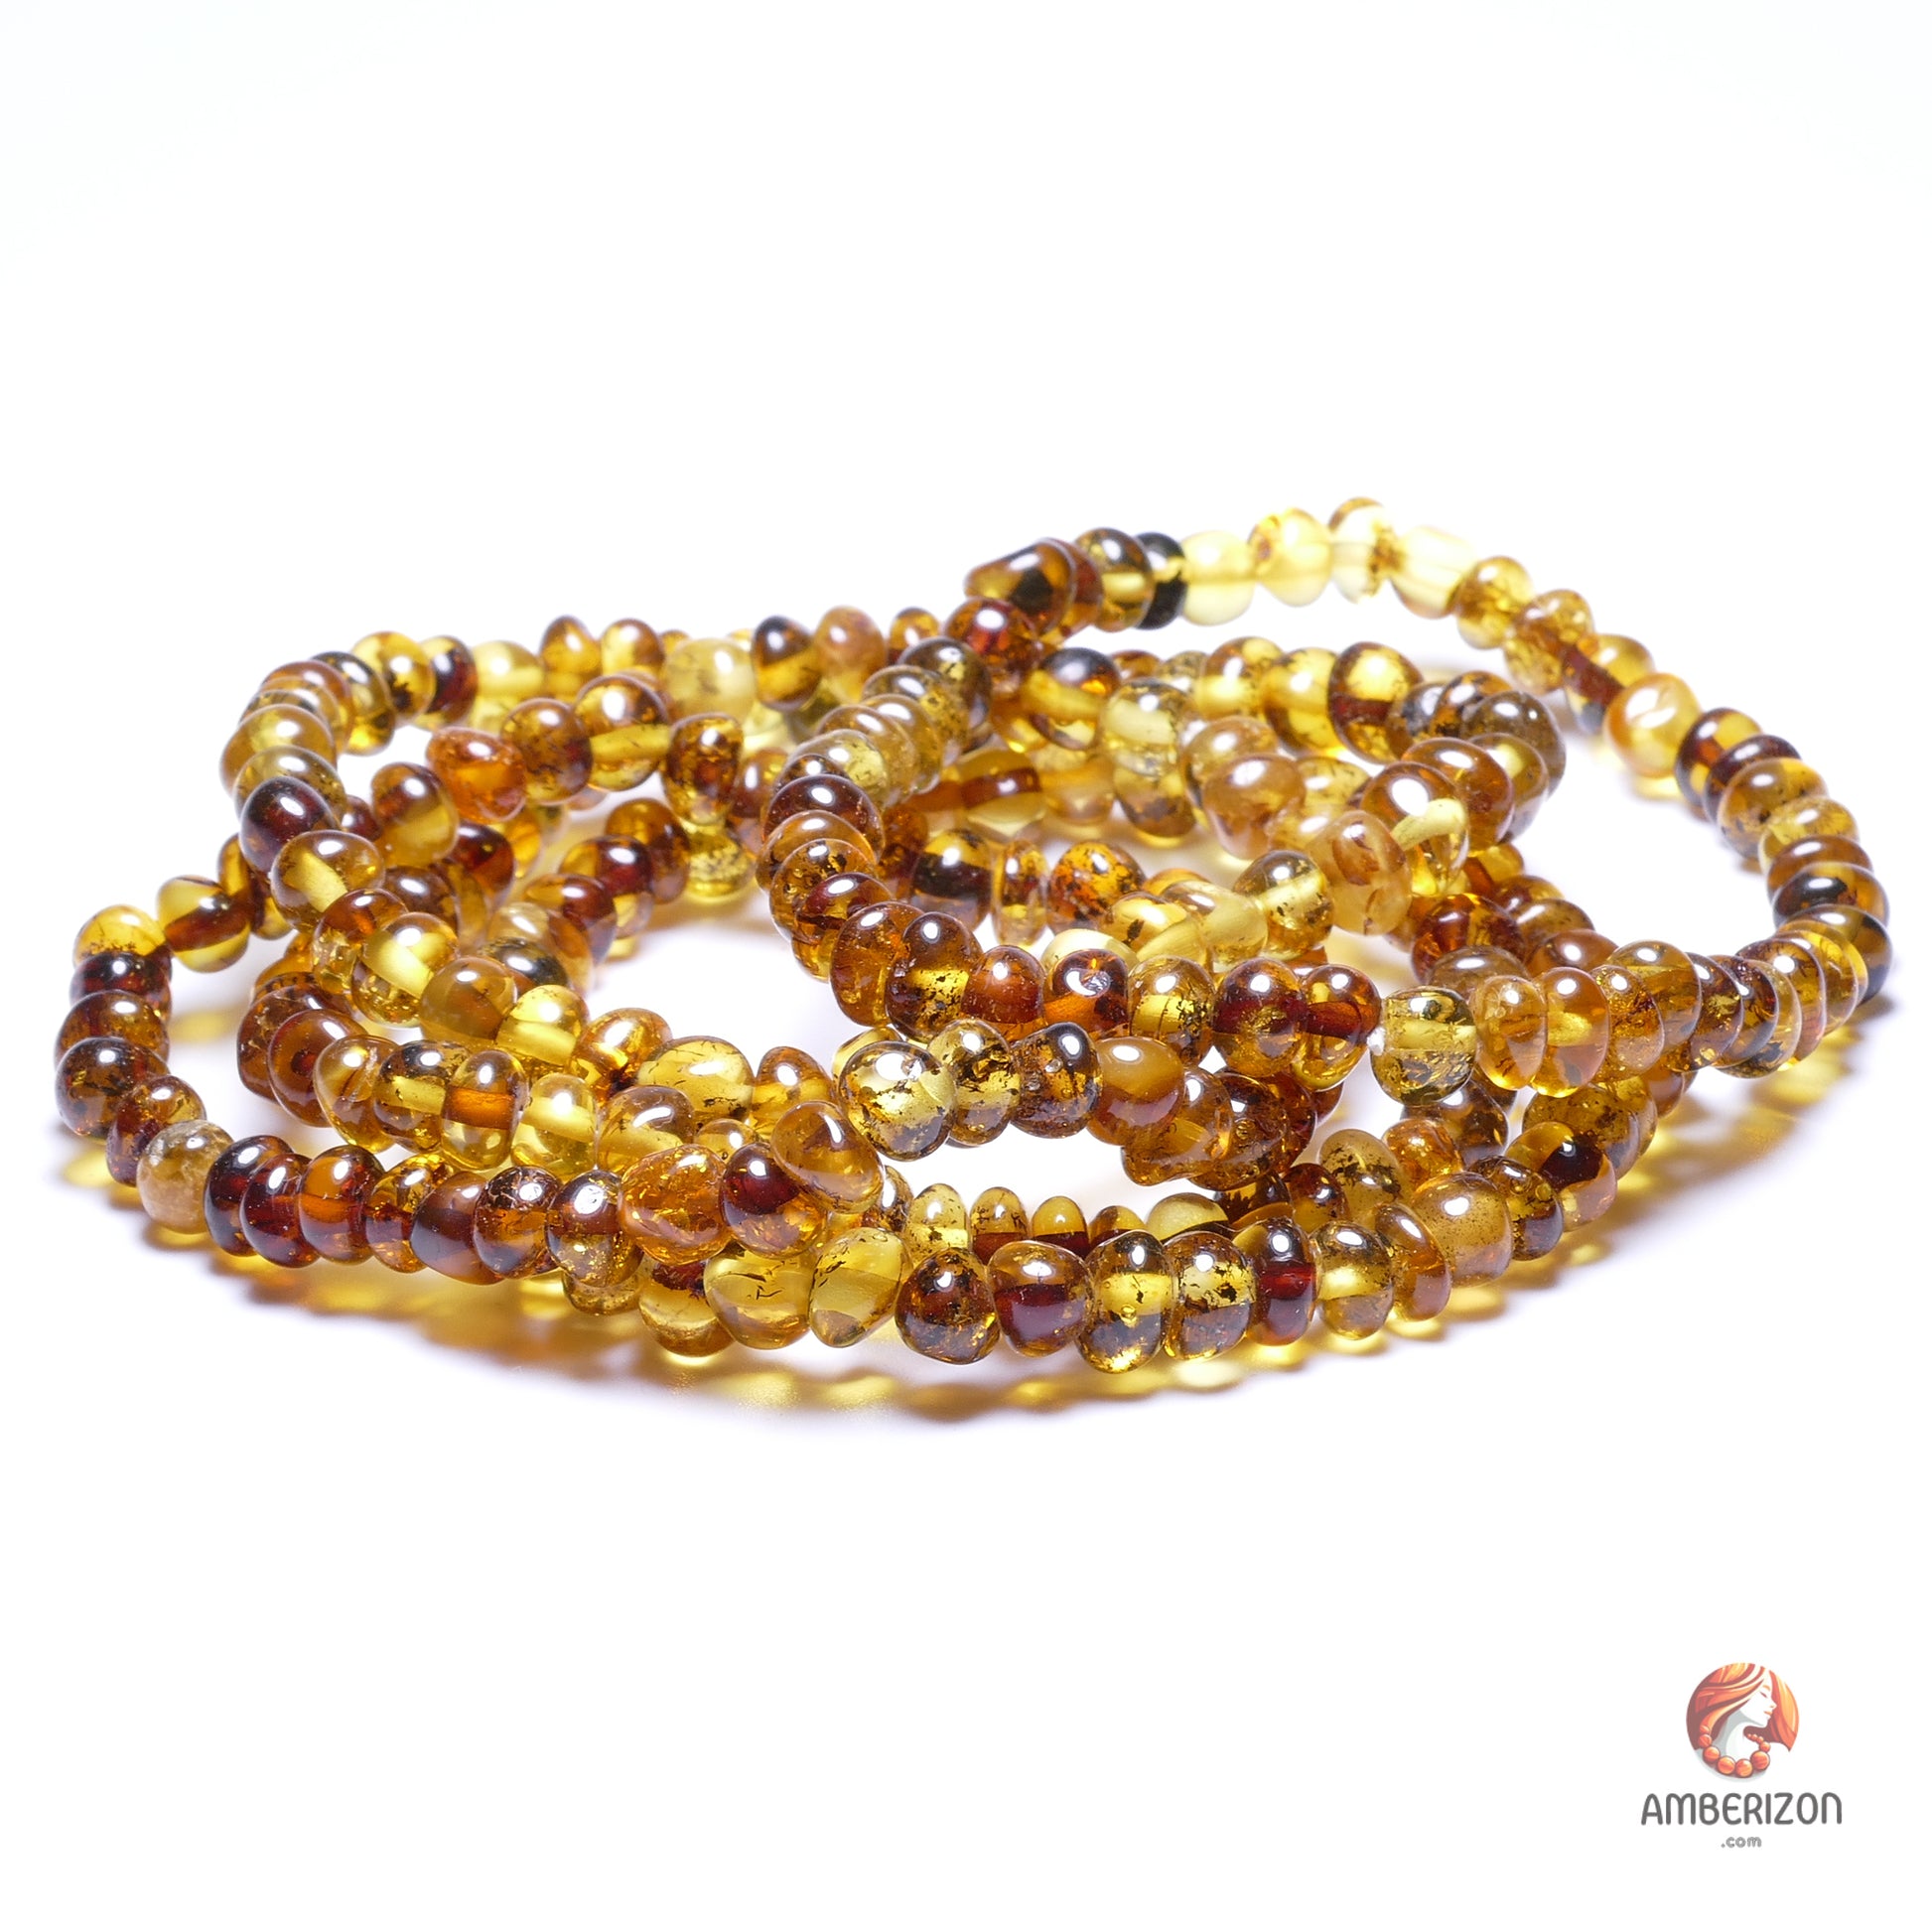 Lemon-green Baltic amber bracelet - Polished baroque beads